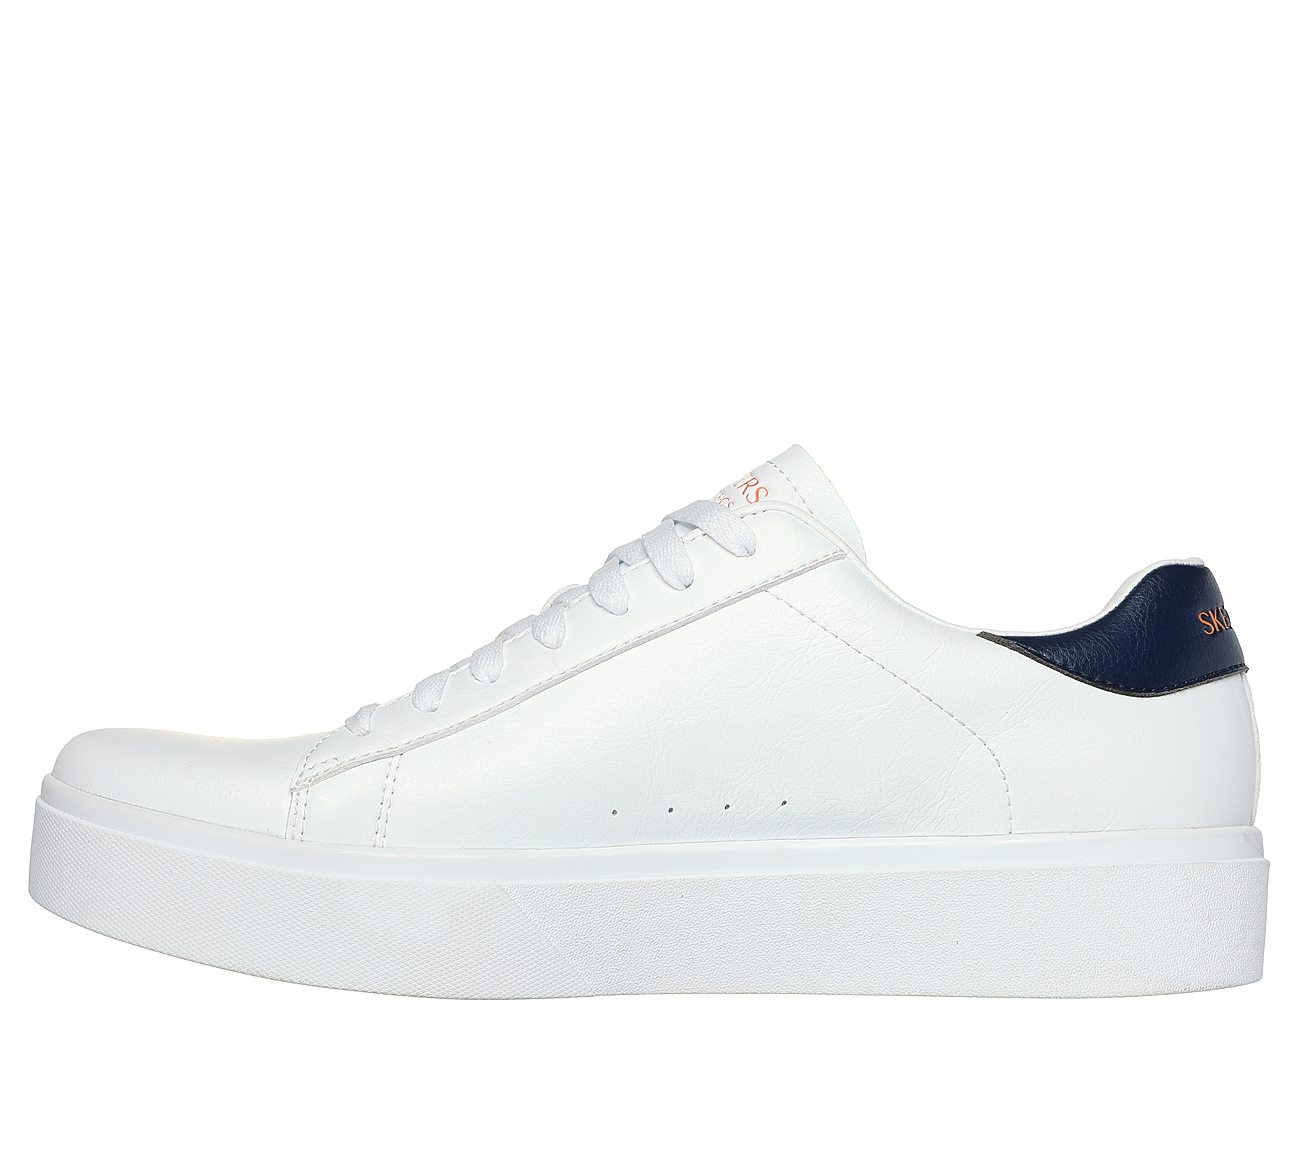 EDEN LX - REMEMBRANCE, WHITE ORANGE Footwear Left View